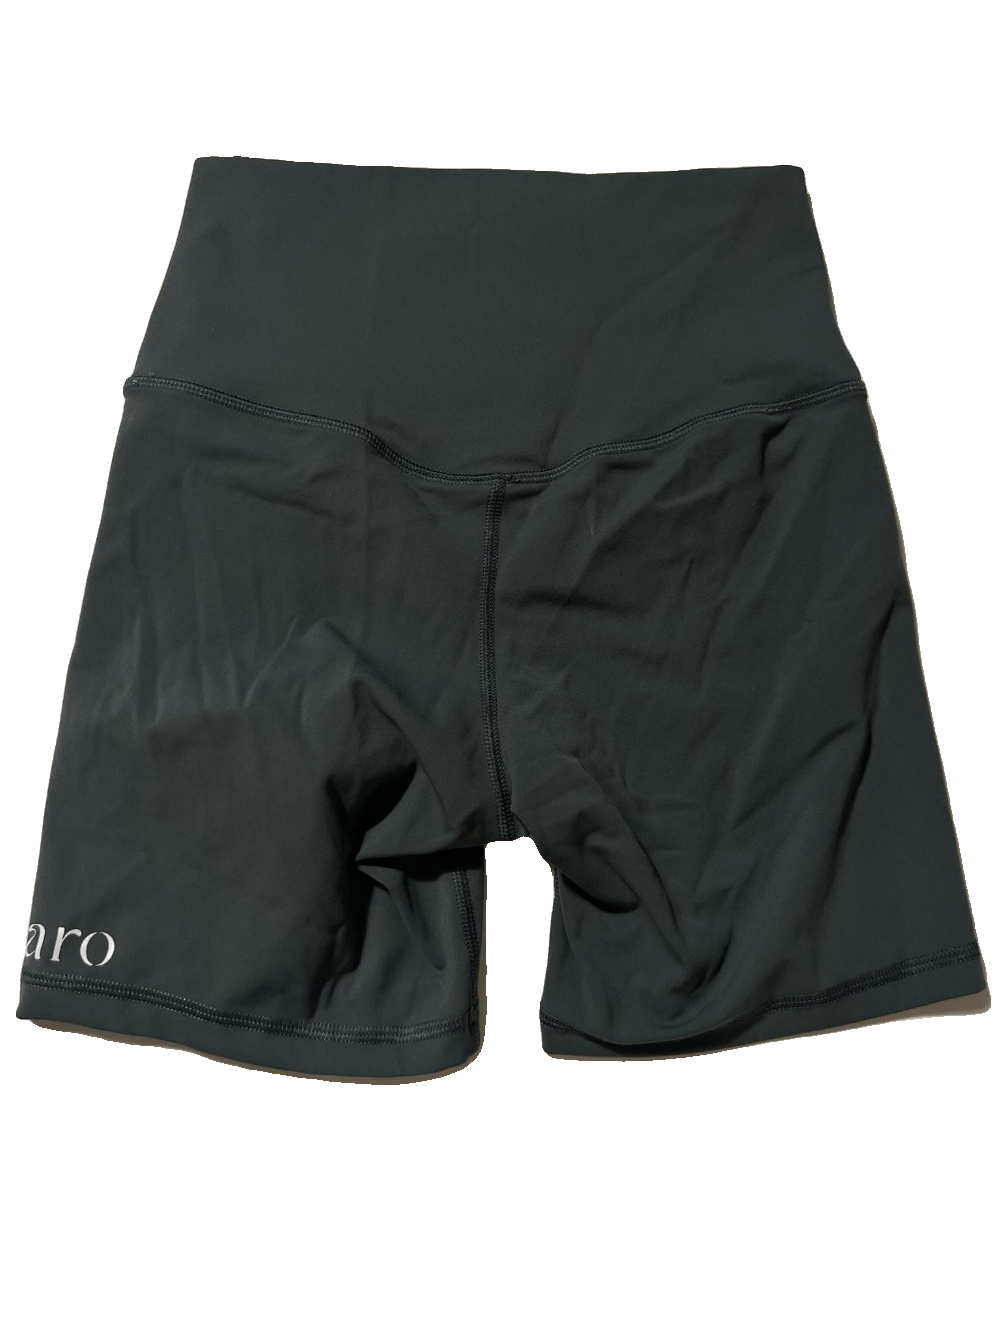 Aro- Green Biker Shorts